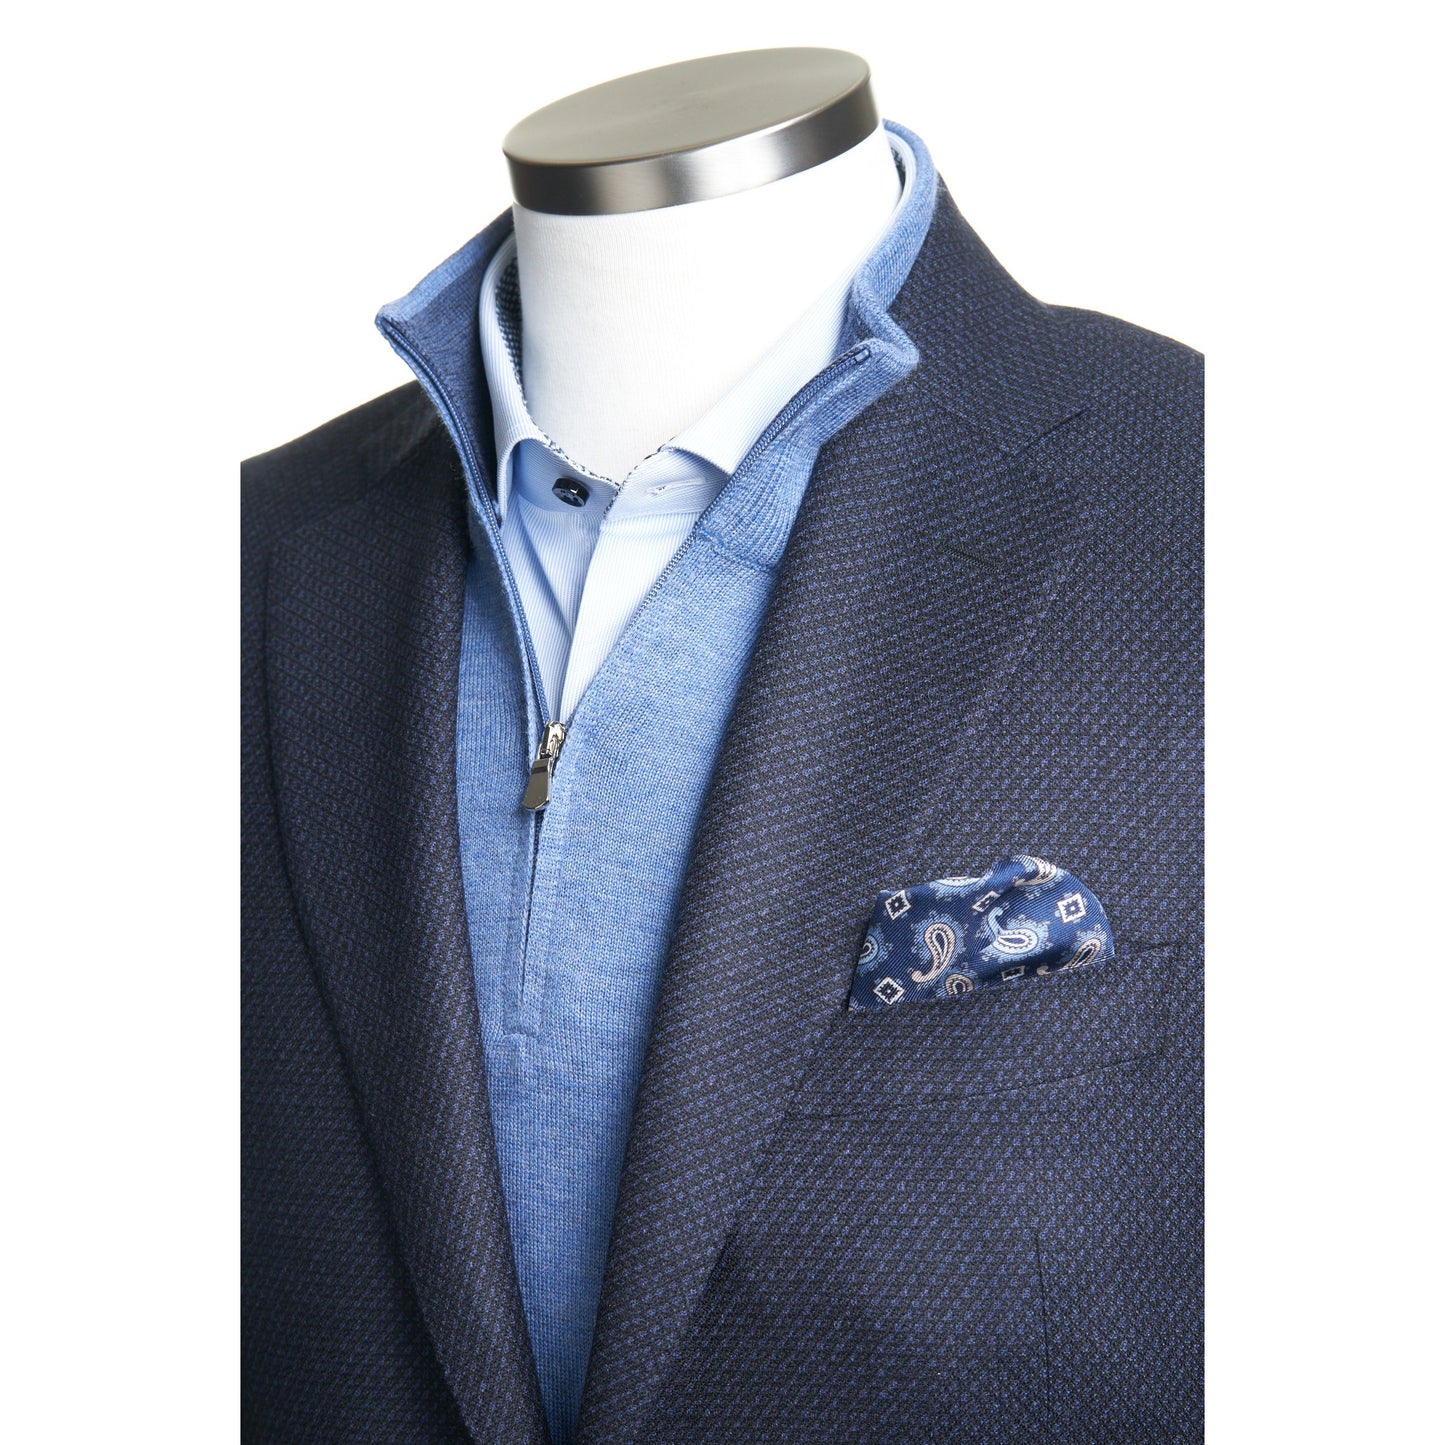 Canali Siena Model Wool Sport Coat in Blue and Light Blue Micro Pattern